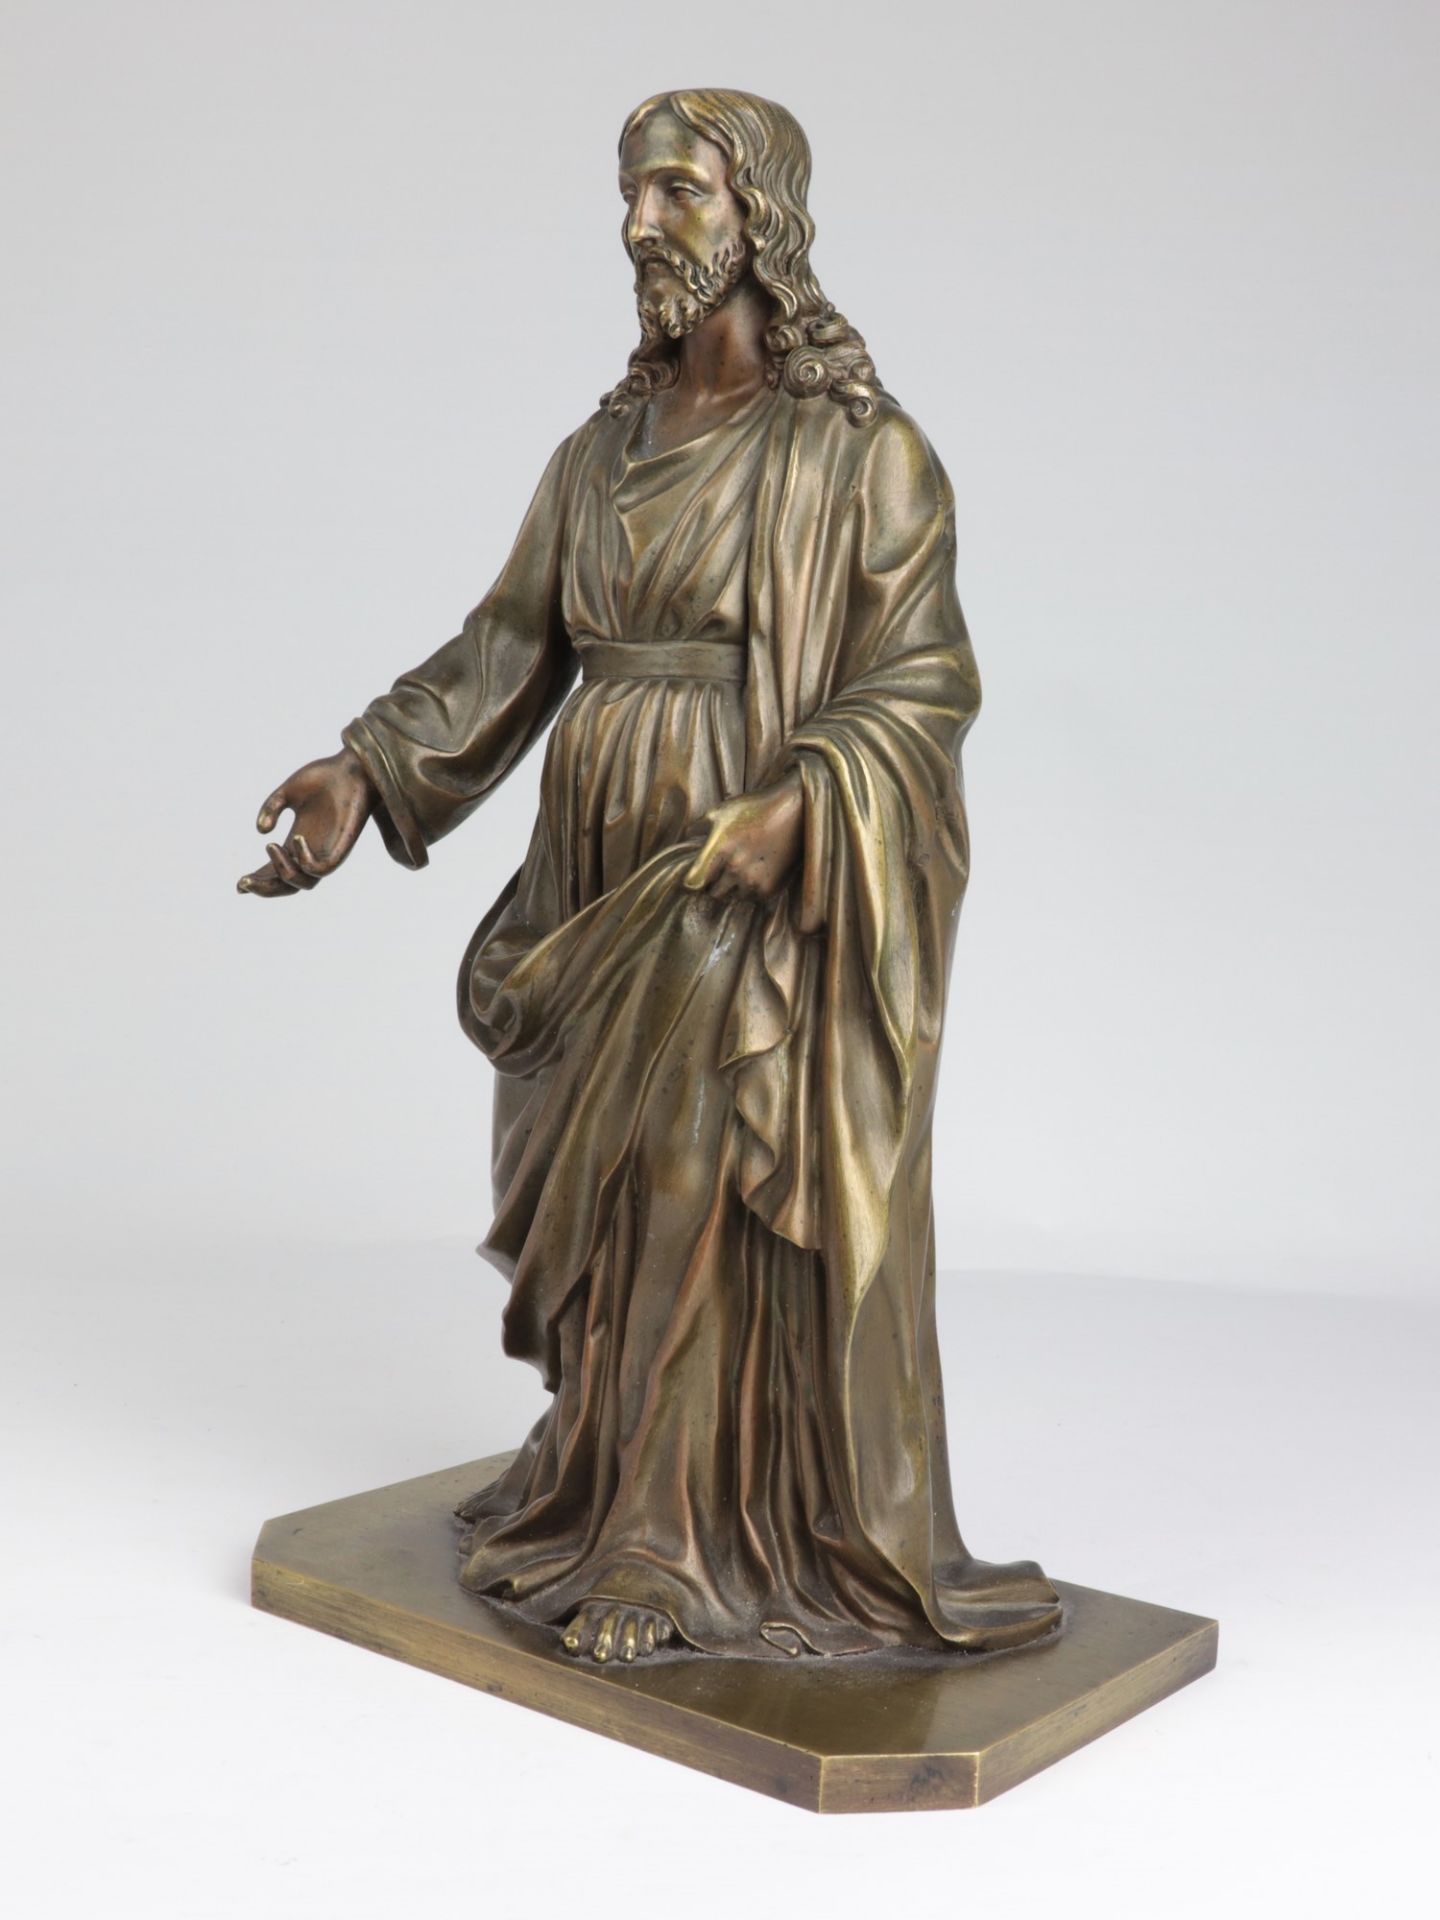 Bronzekulptur um 1900, Bronze, patiniert, vollplastische Figur v. Christus als Prophet, reicher - Image 3 of 4